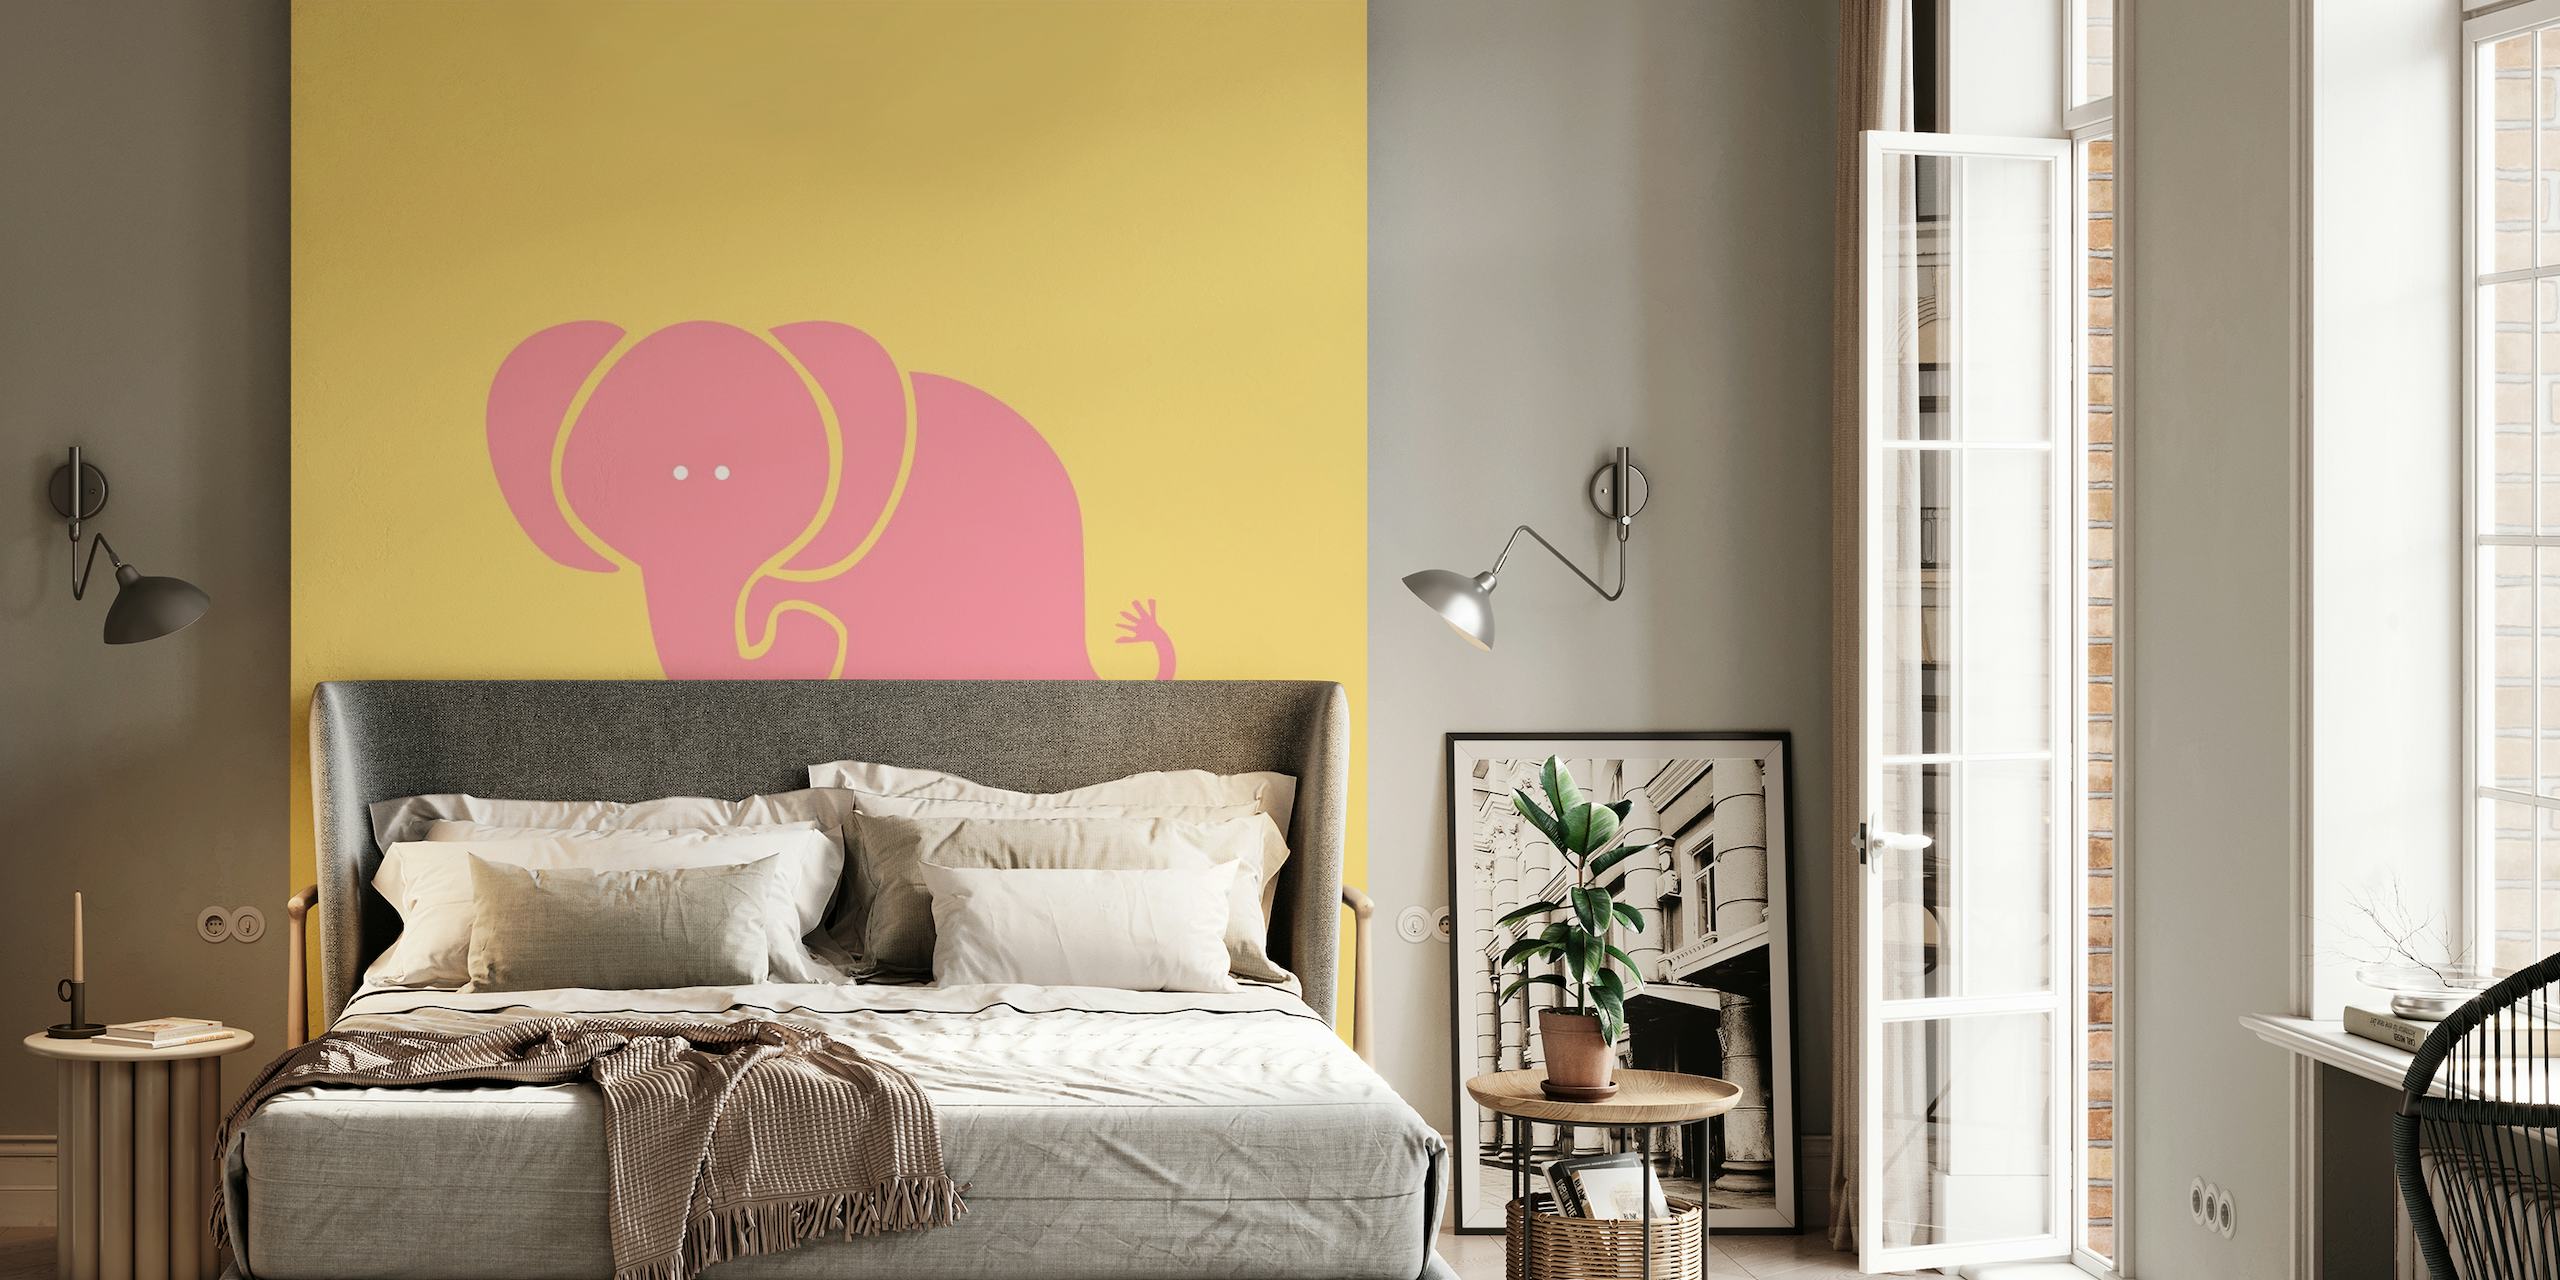 Stylized saffron yellow elephant on a pink backdrop wall mural